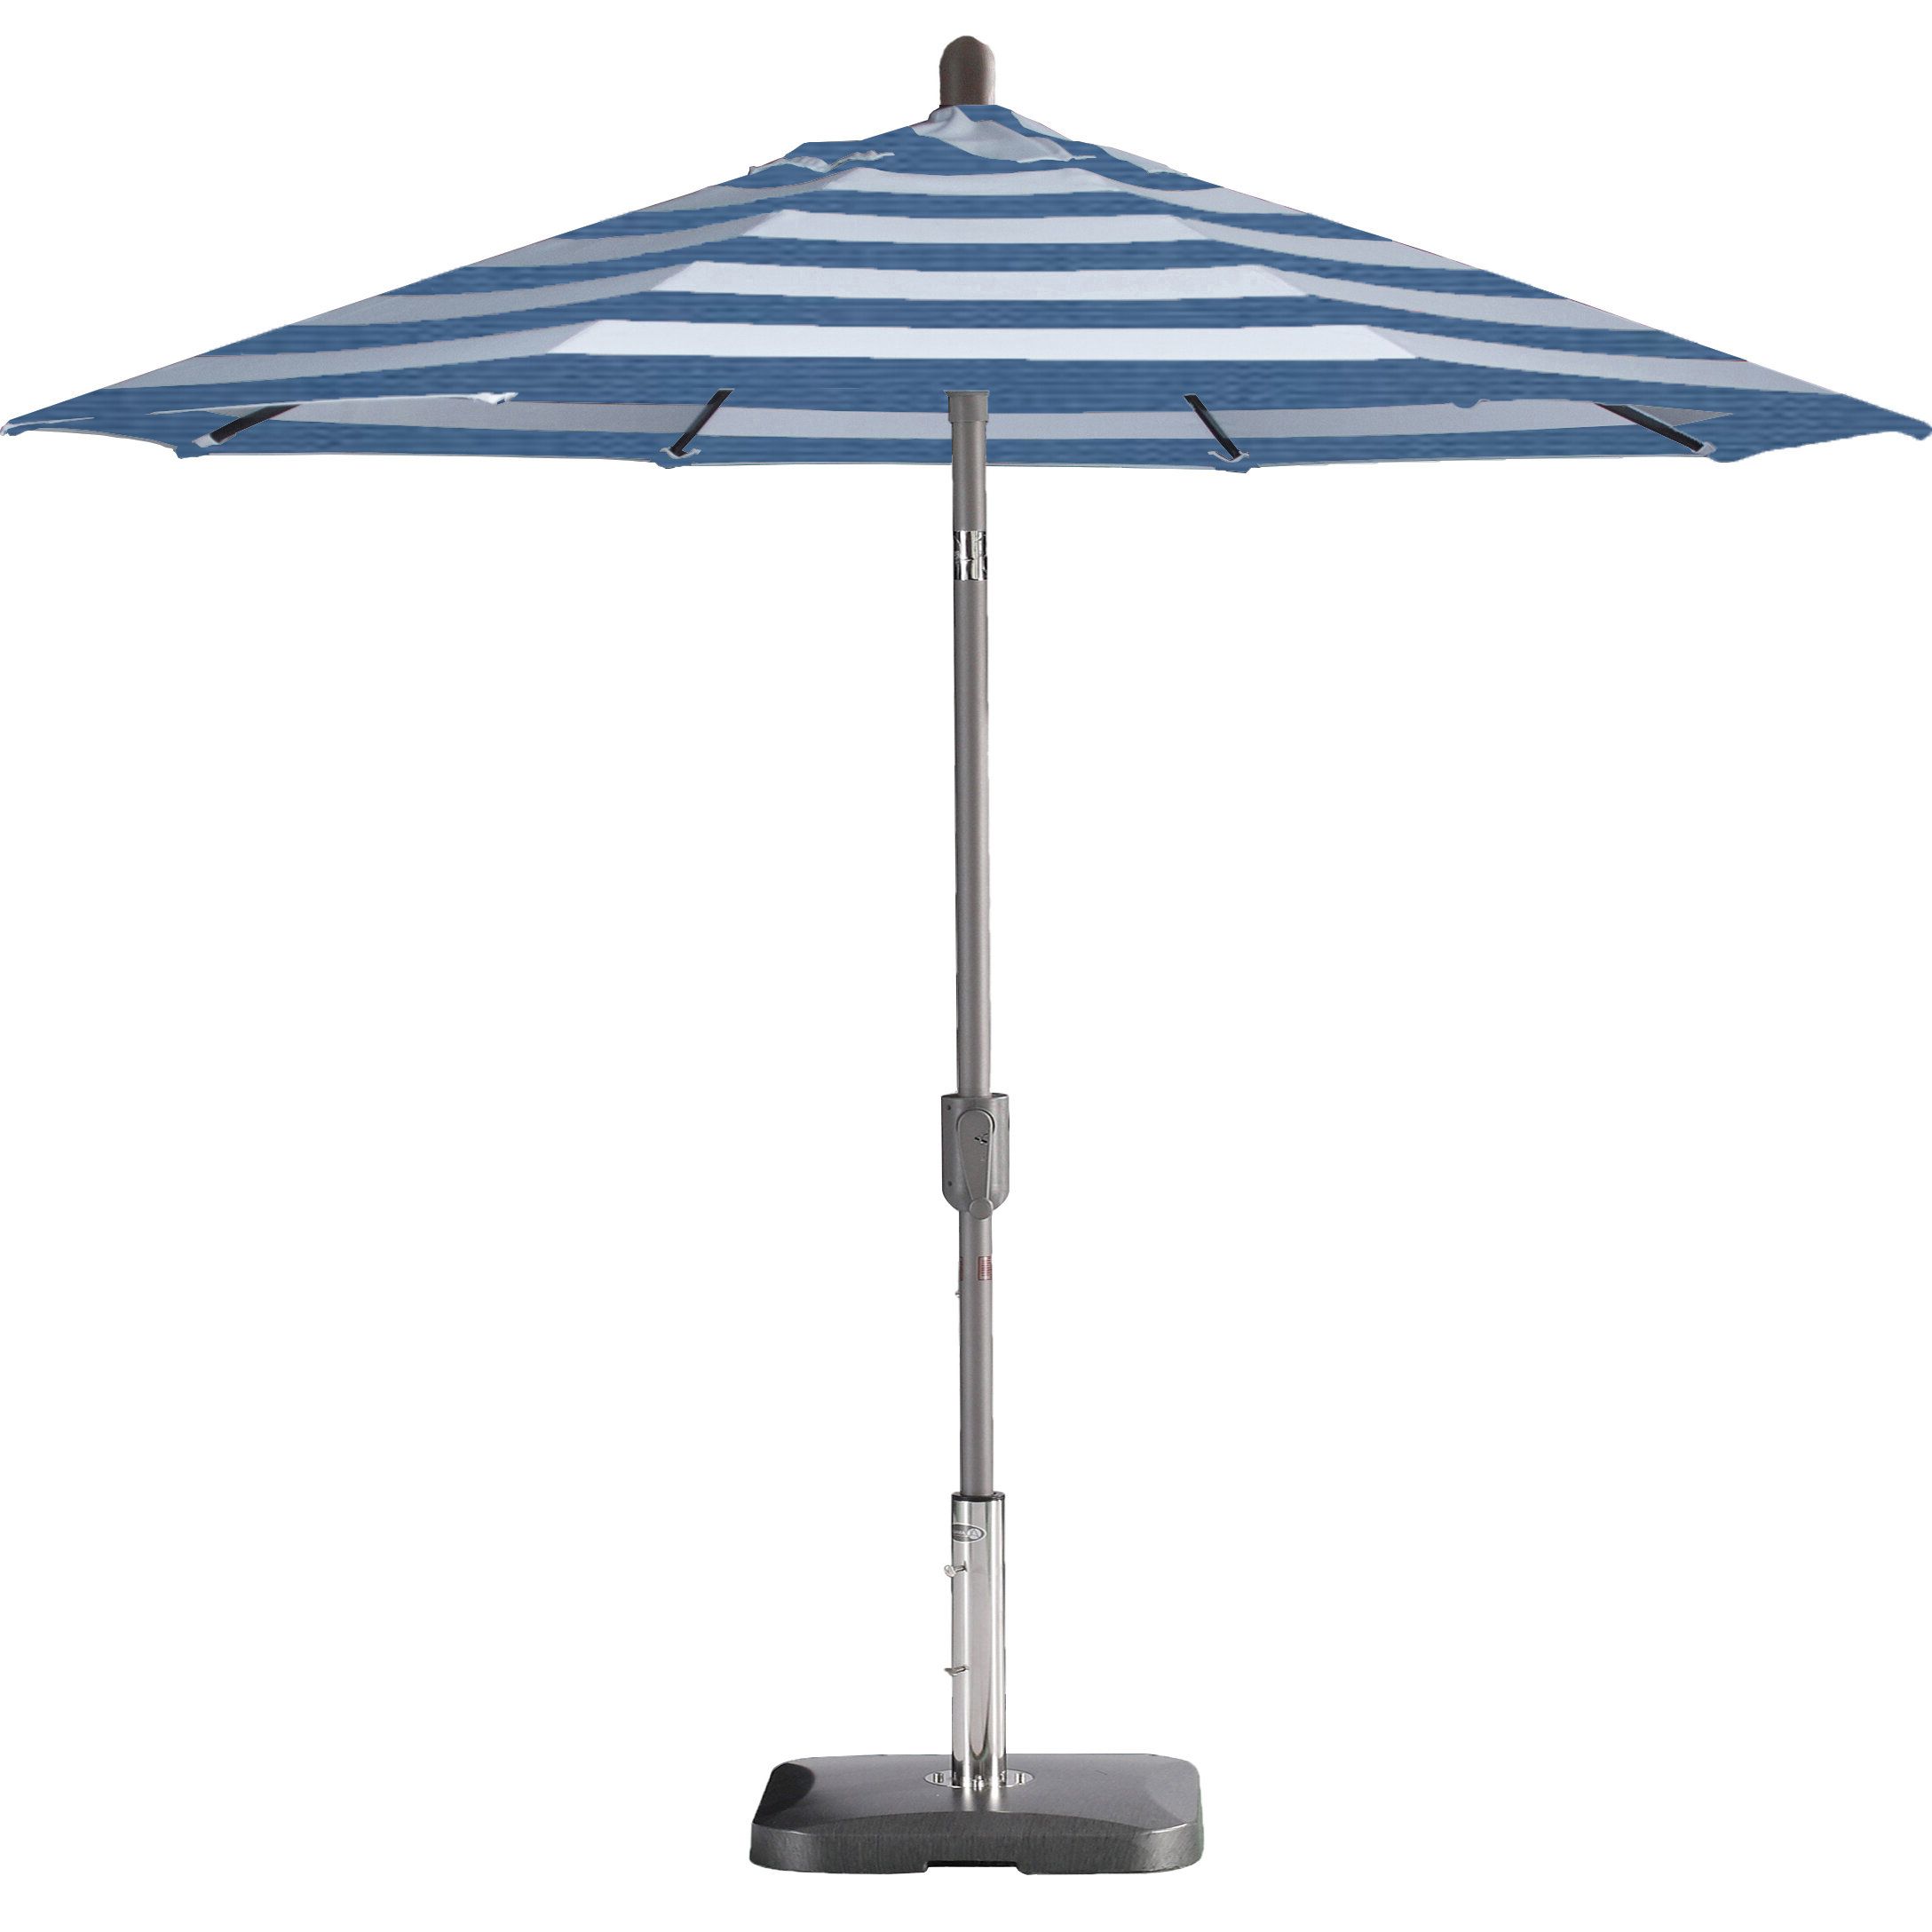 Wiebe Market Sunbrella Umbrellas For Recent Wiechmann Push Tilt 9' Market Sunbrella Umbrella (View 9 of 20)